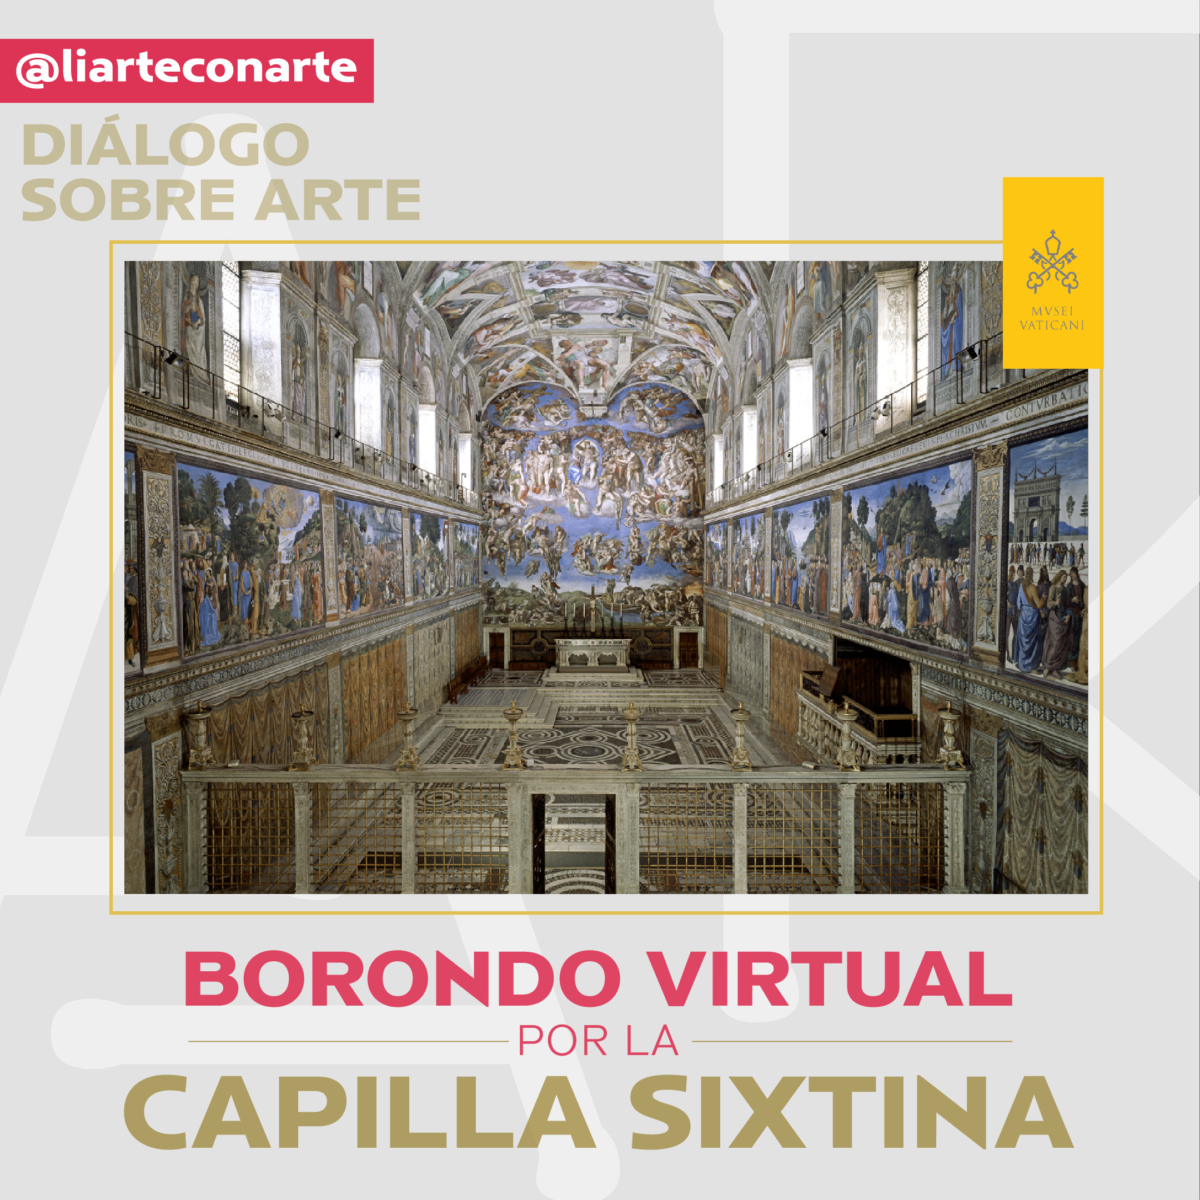 Borondo virtual por la Capilla Sixtina